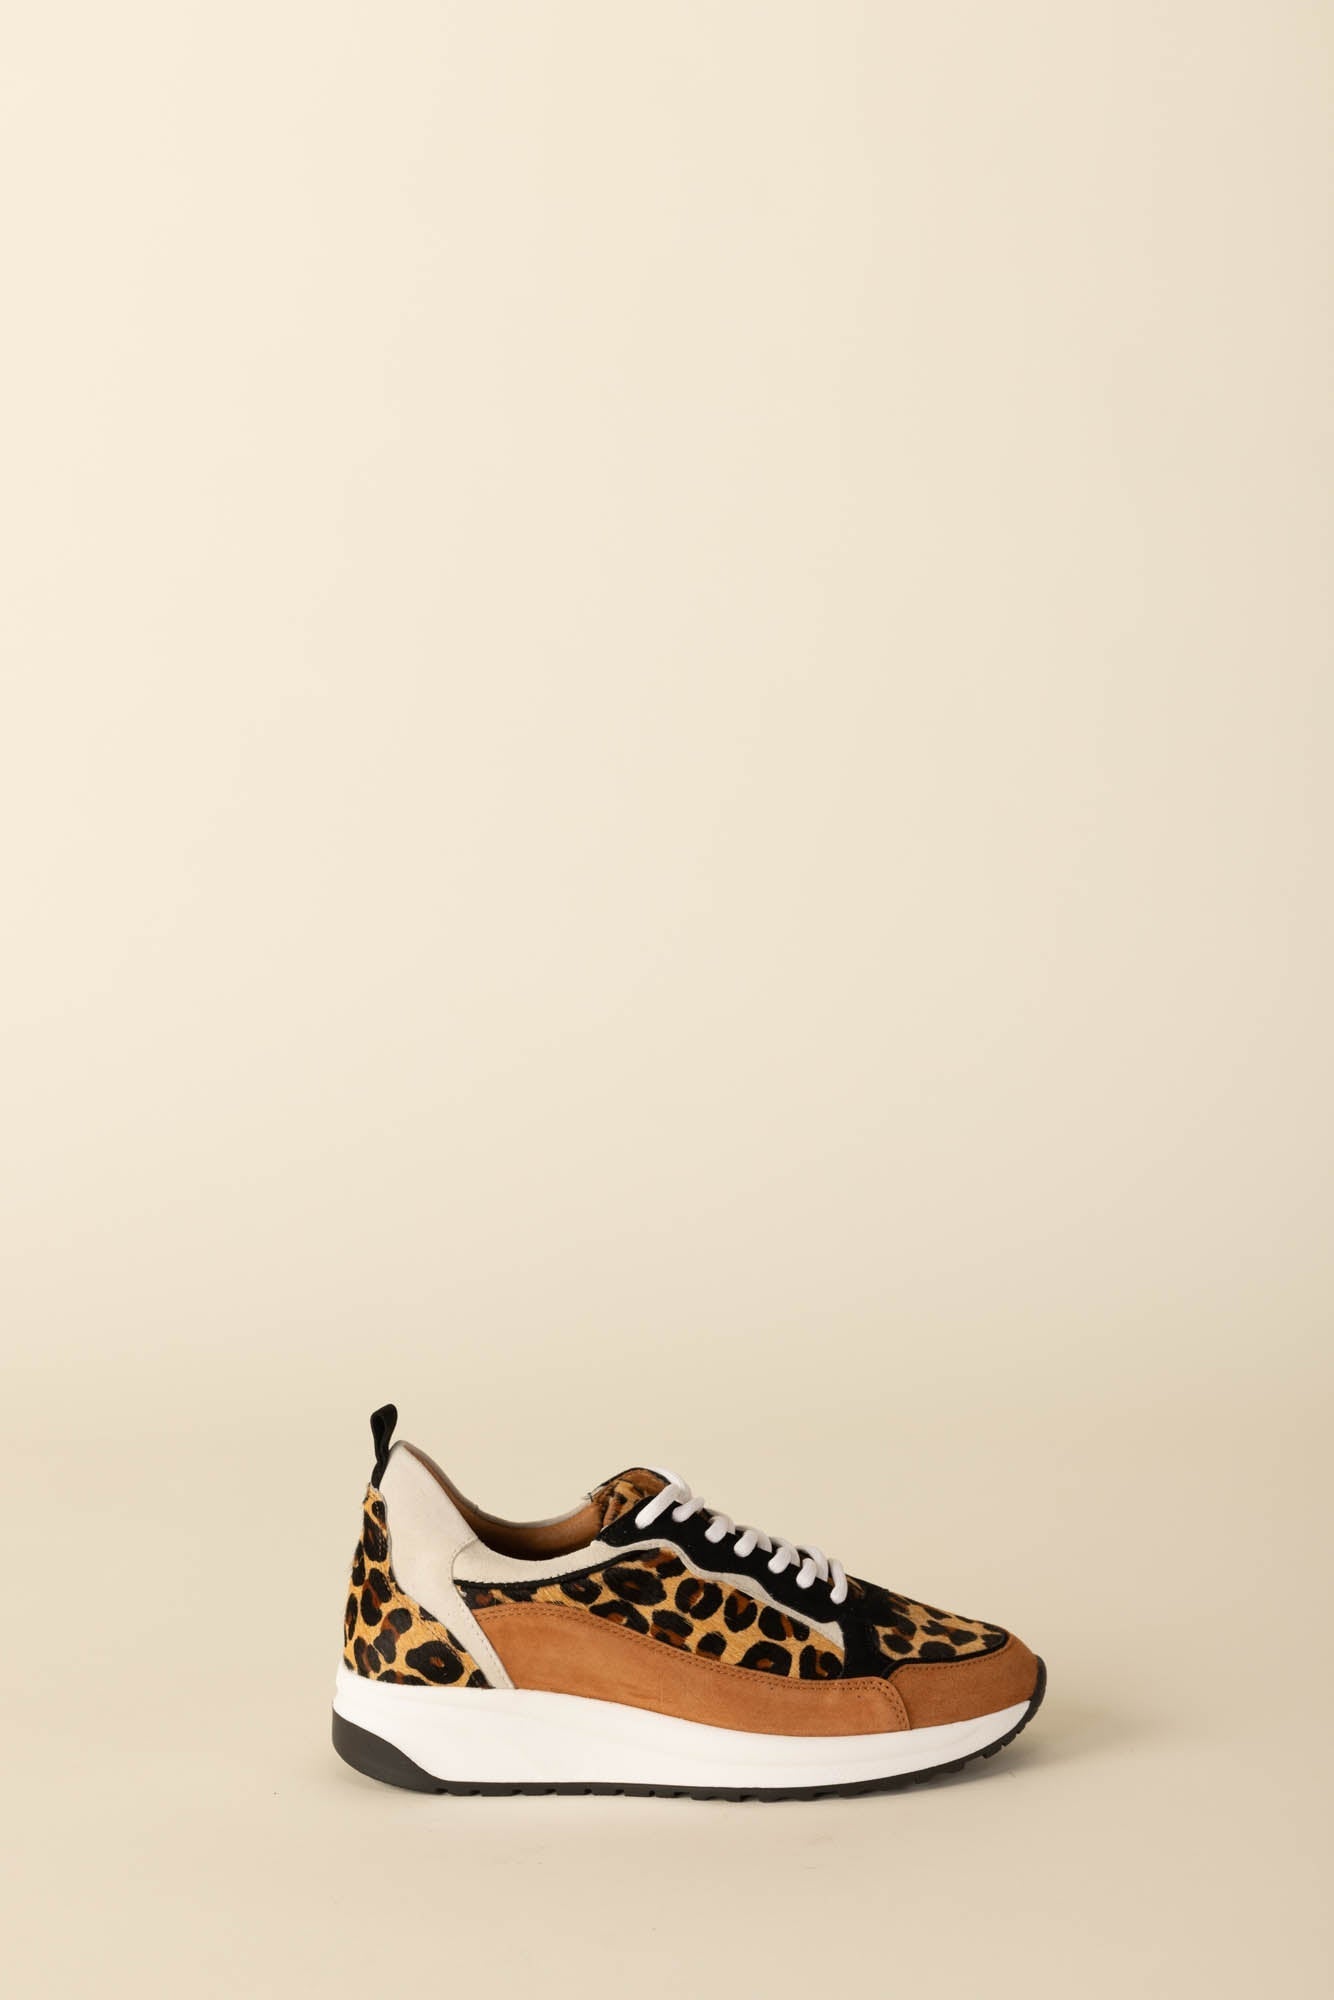 Leopard maximilien sneakers